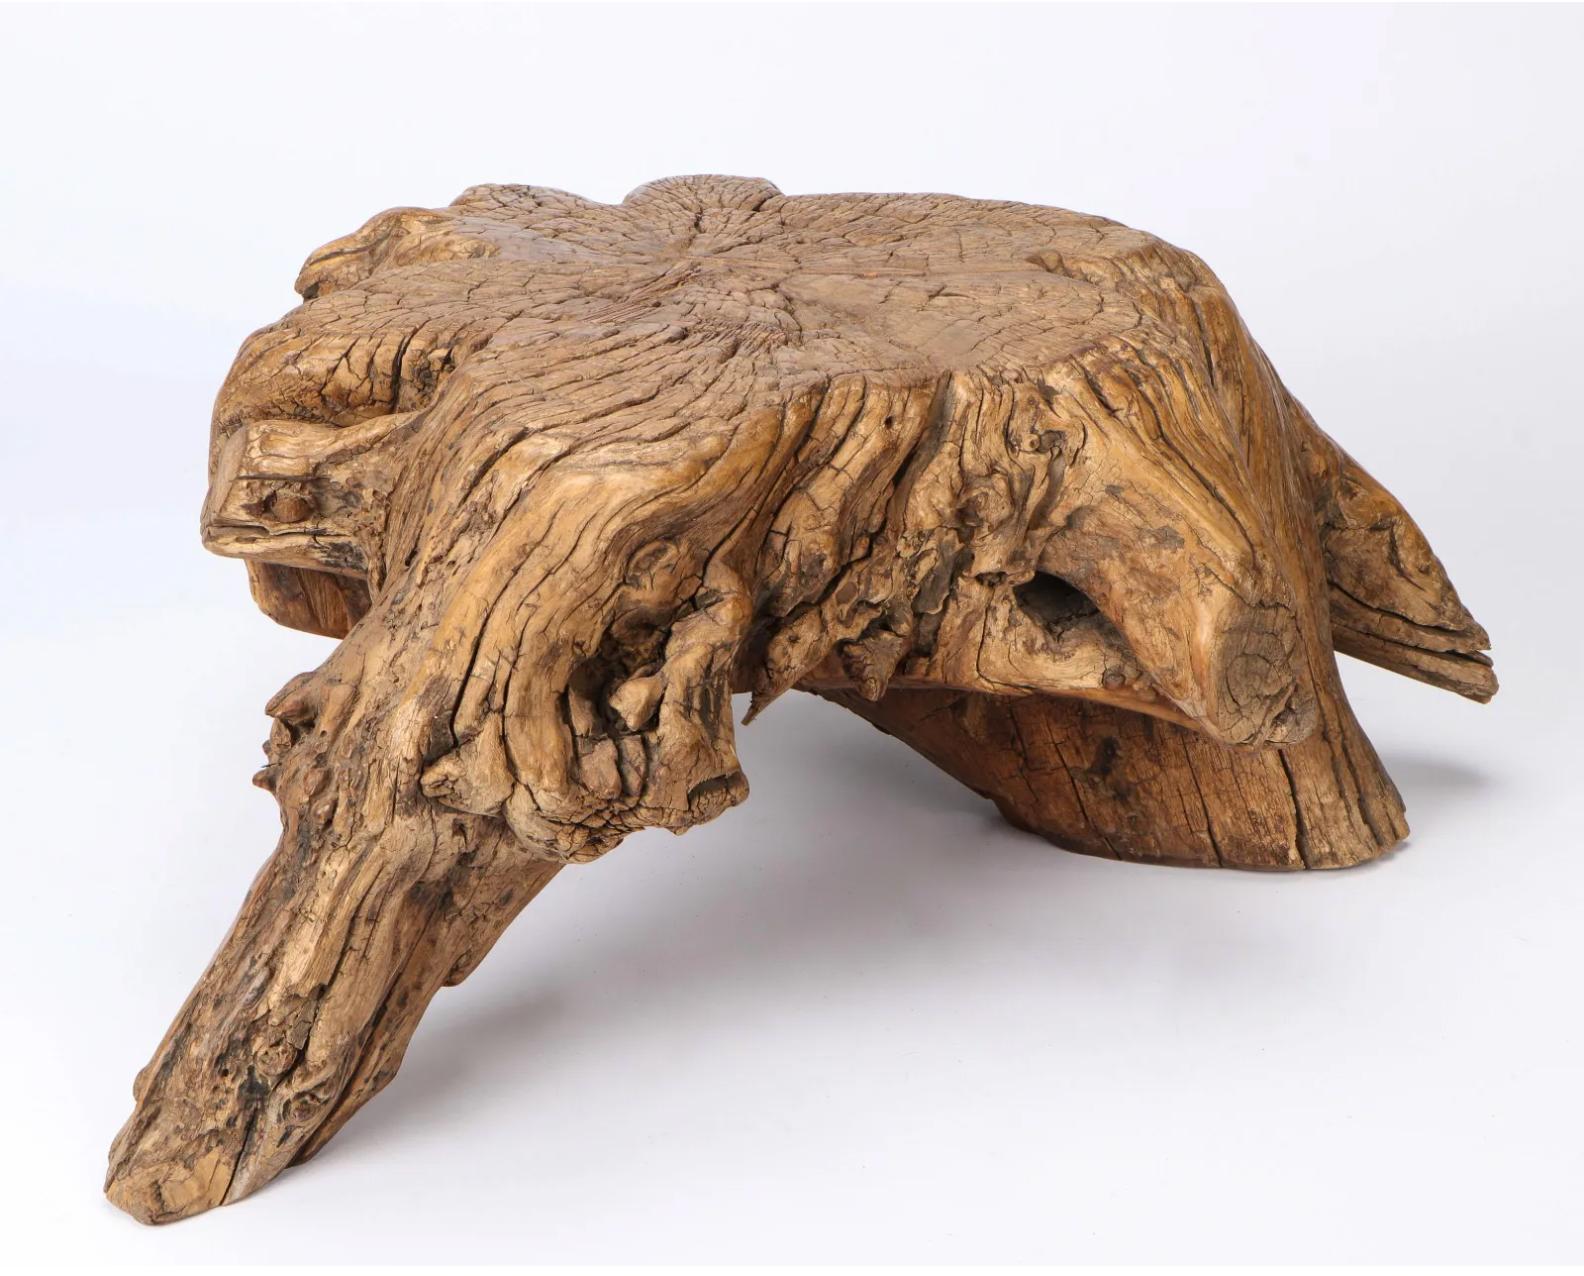 Chinese Rare Natural Root Wood Table / Stool, China, 18th Century Primitive